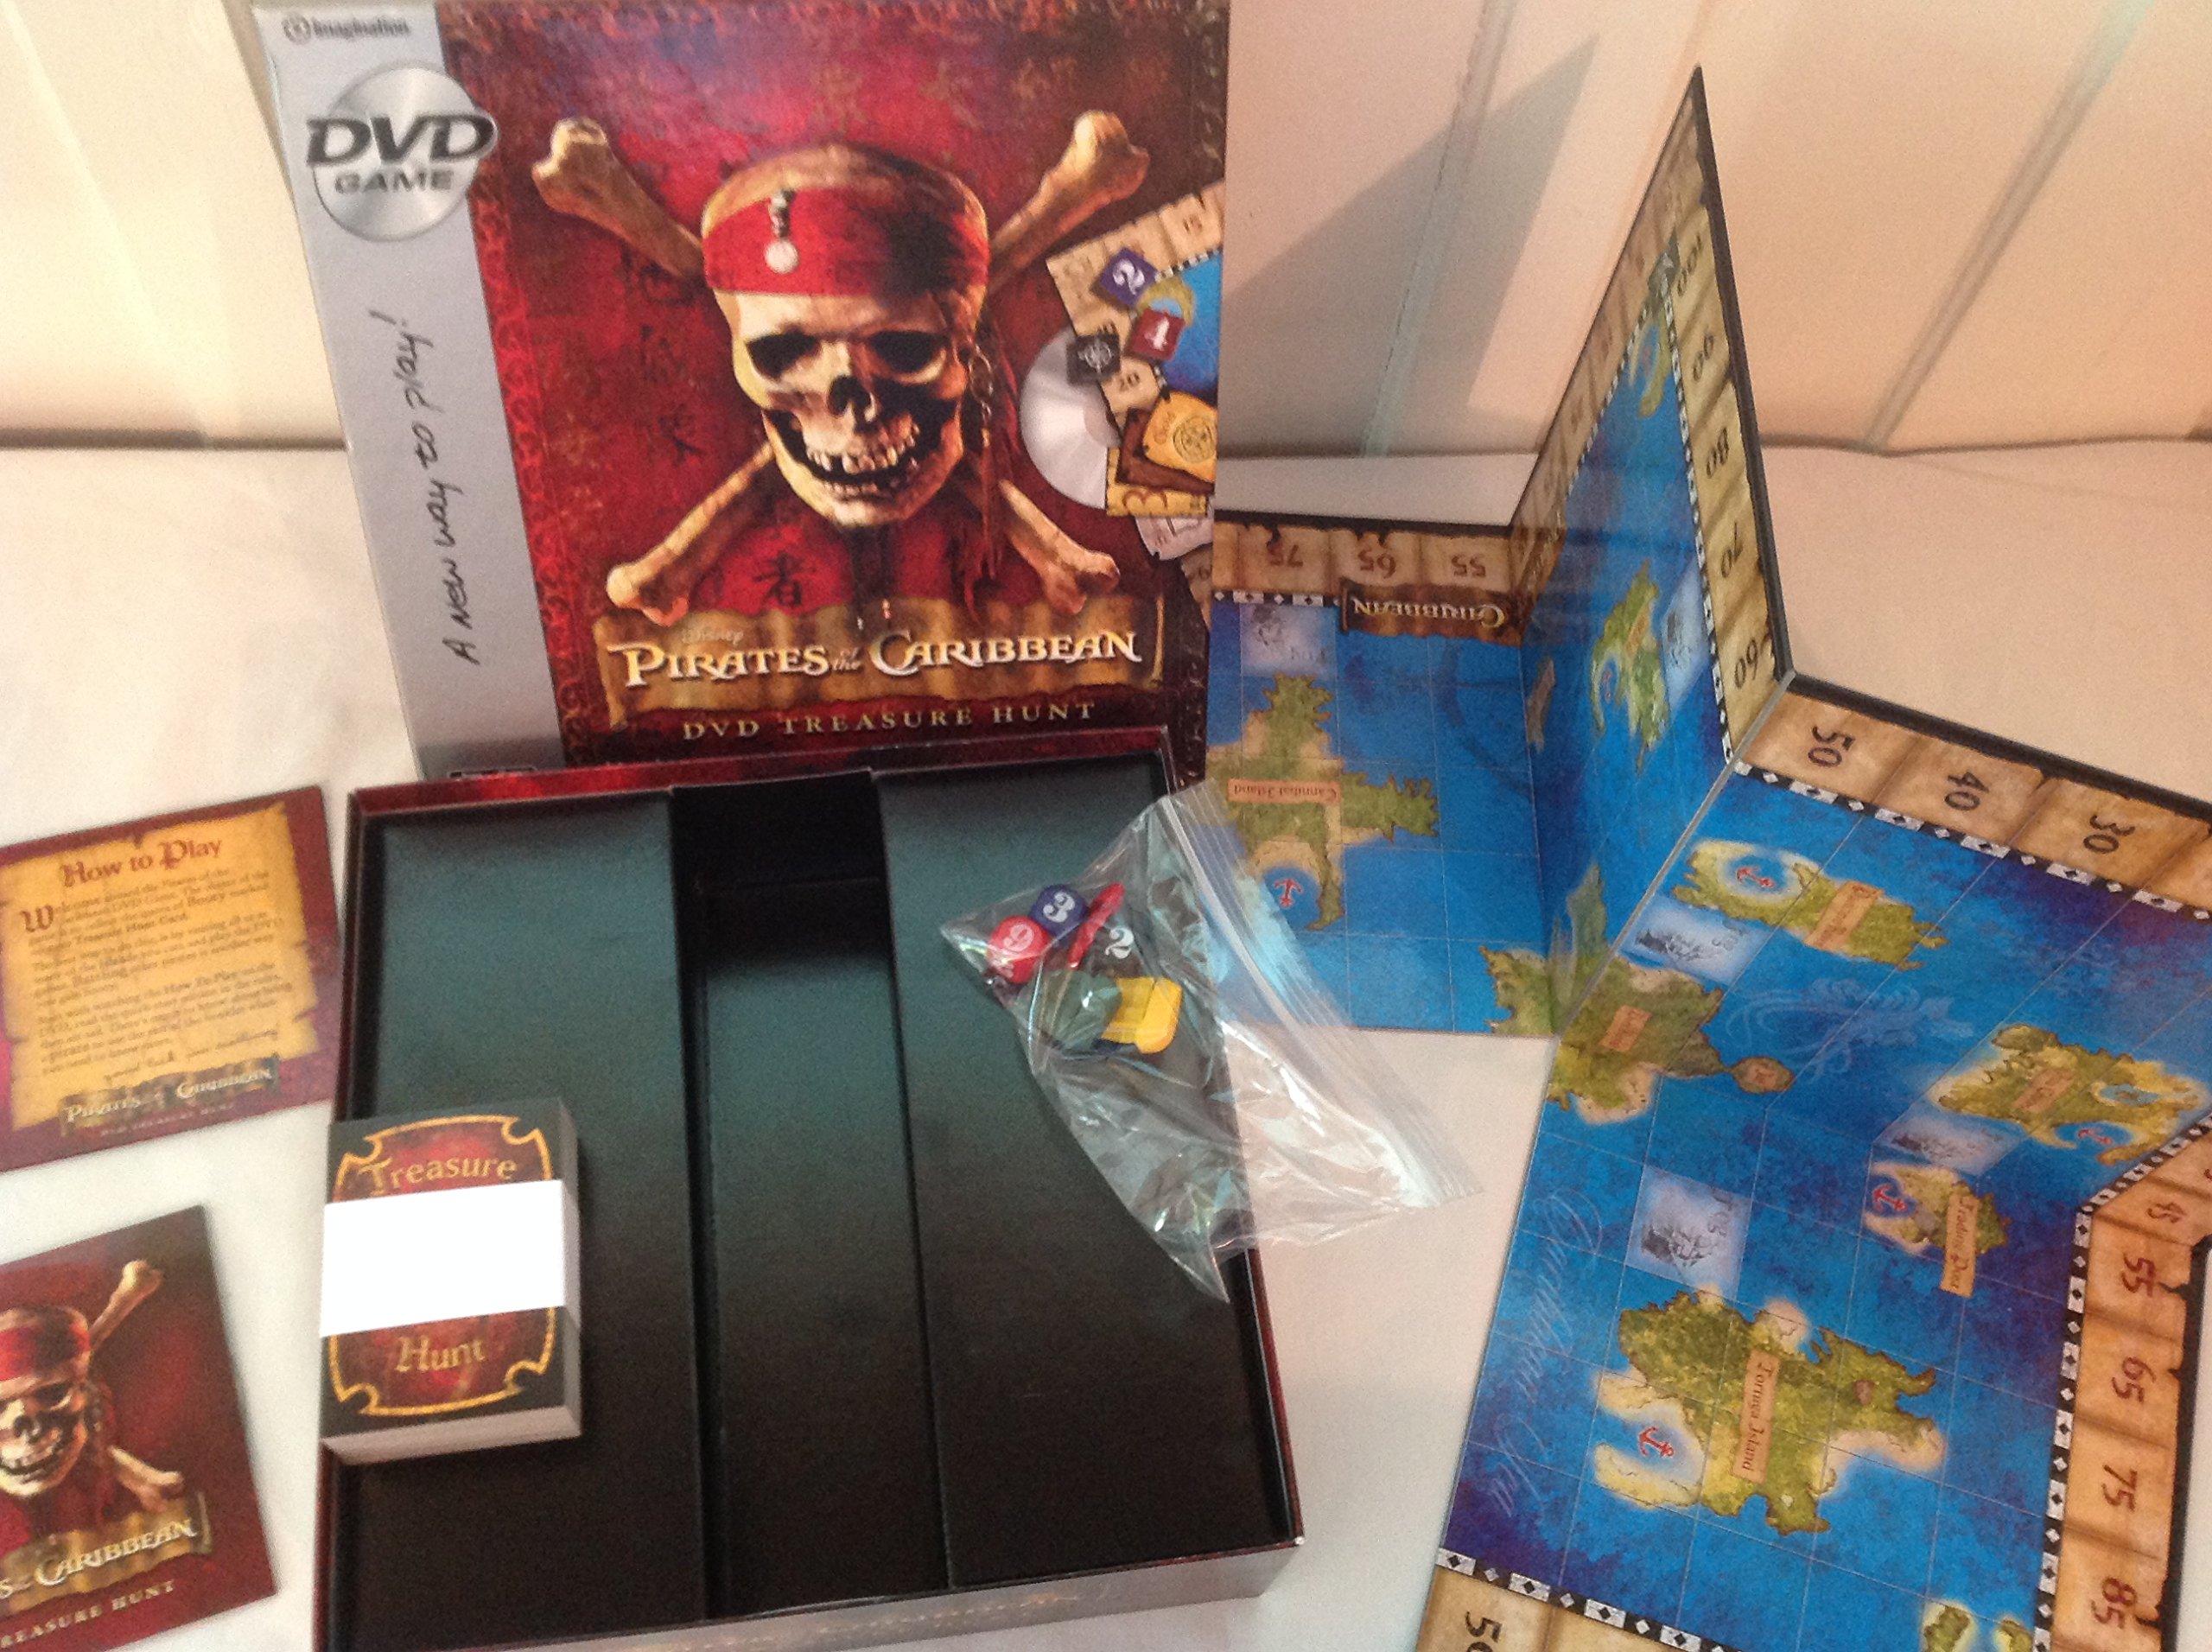 Pirates of the Caribbean DVD Treasure Hunt